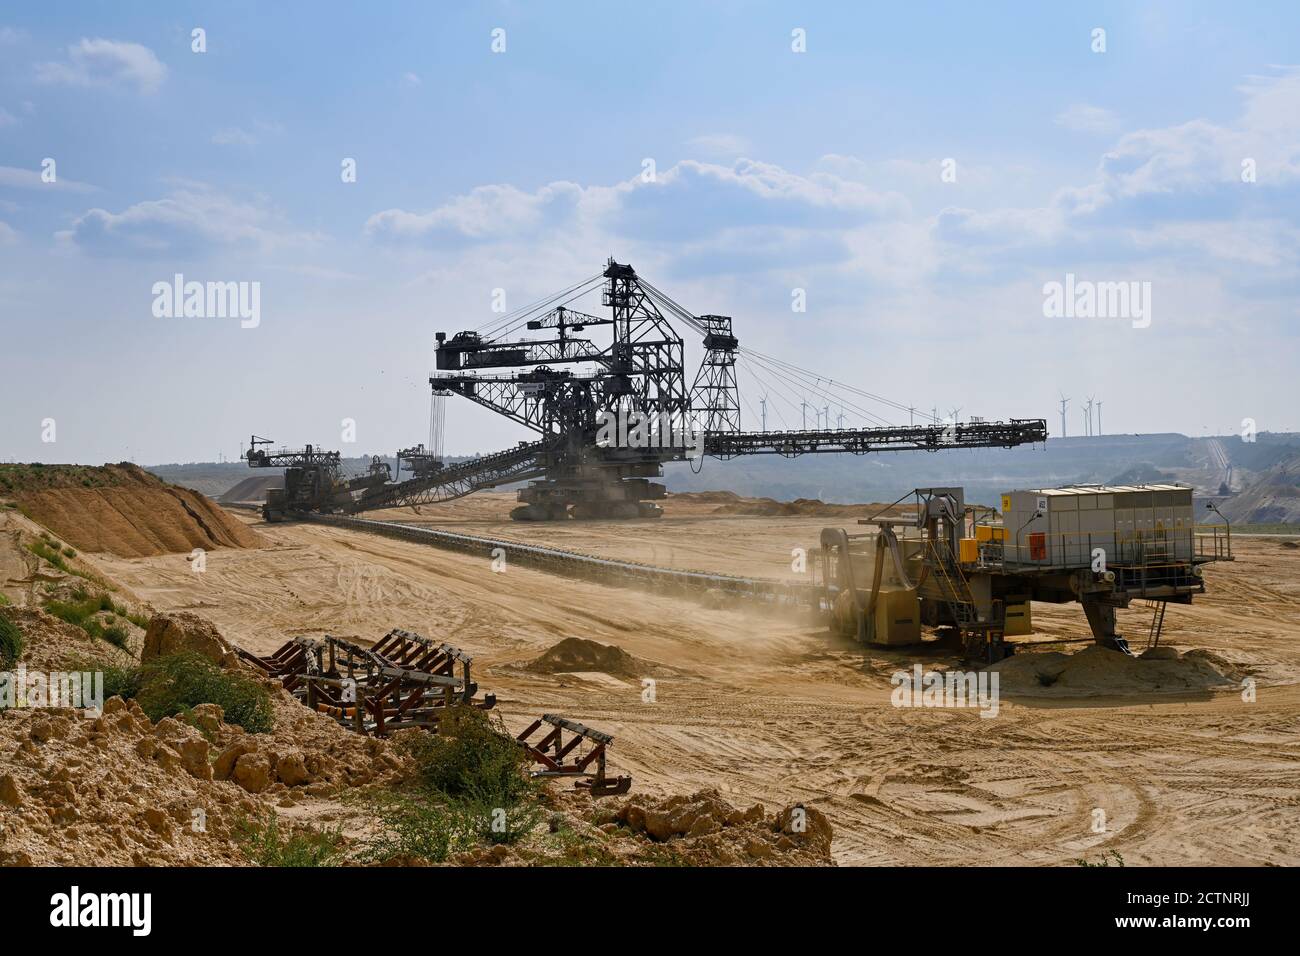 Lignite mining in Garzweiler open pit with bucket wheel excavator Stock Photo